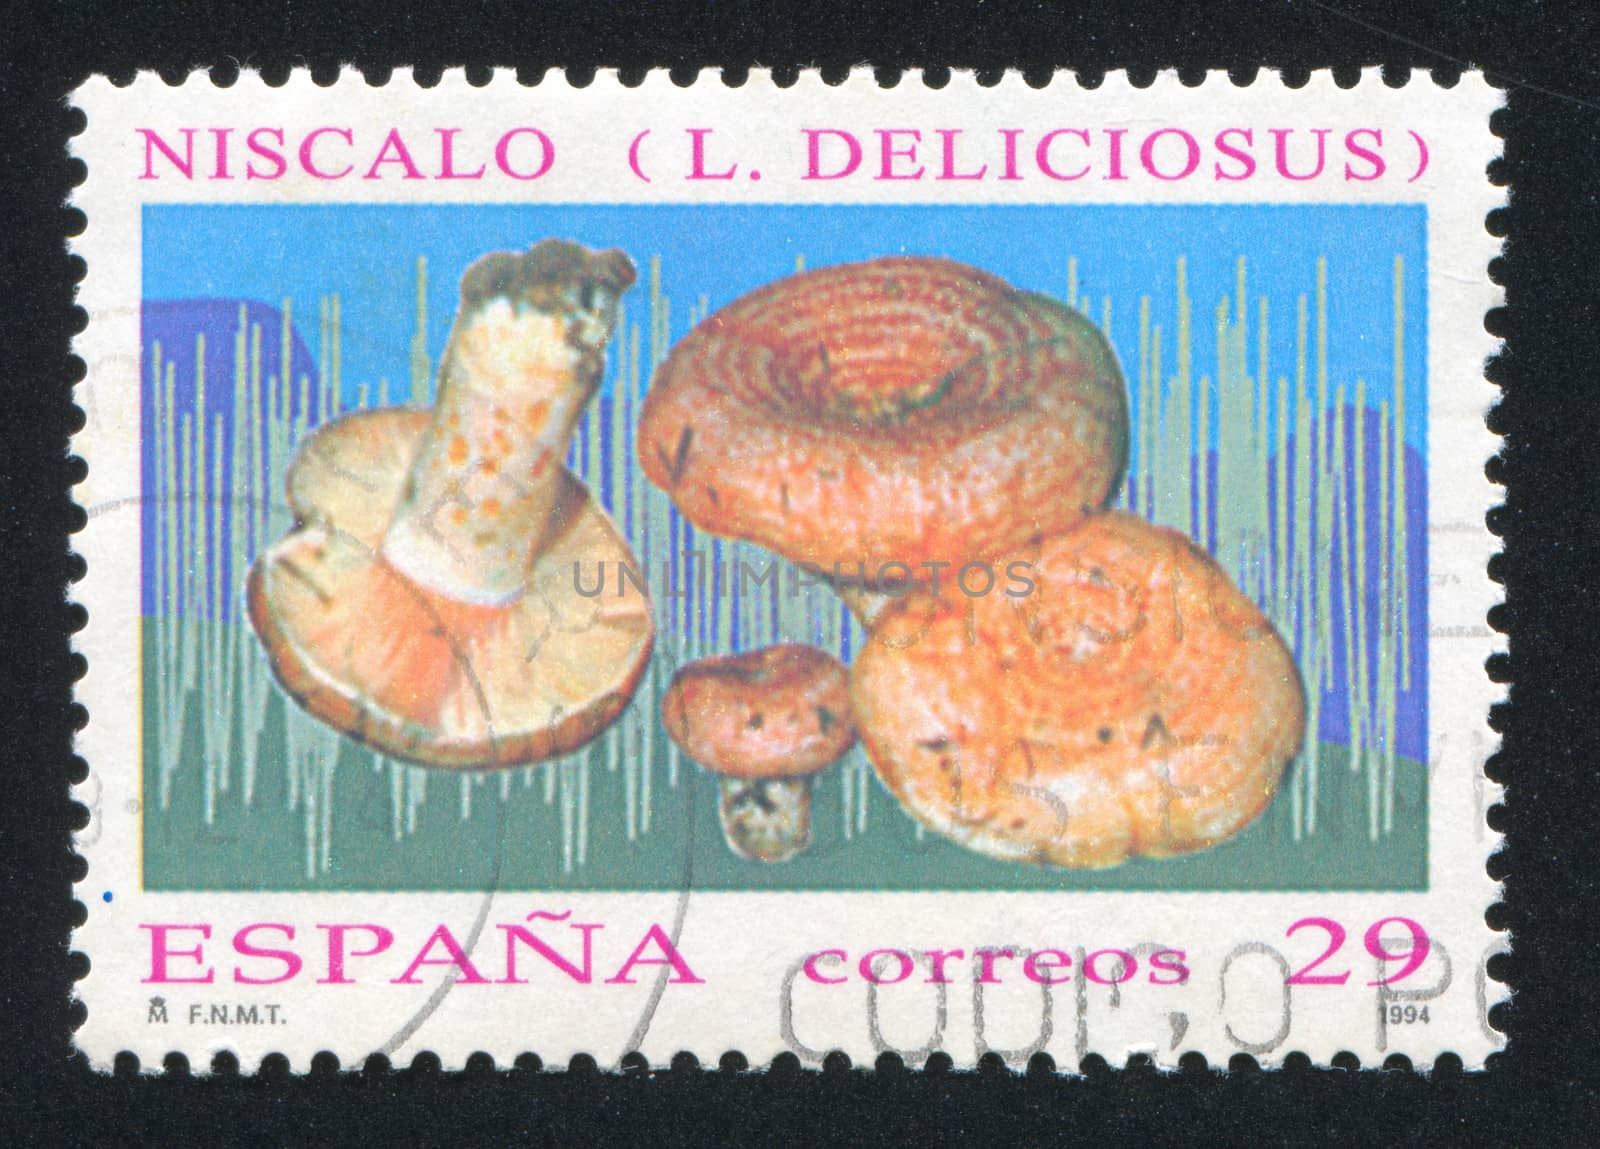 SPAIN - CIRCA 1994: stamp printed by Spain, shows Mushrooms, circa 1994